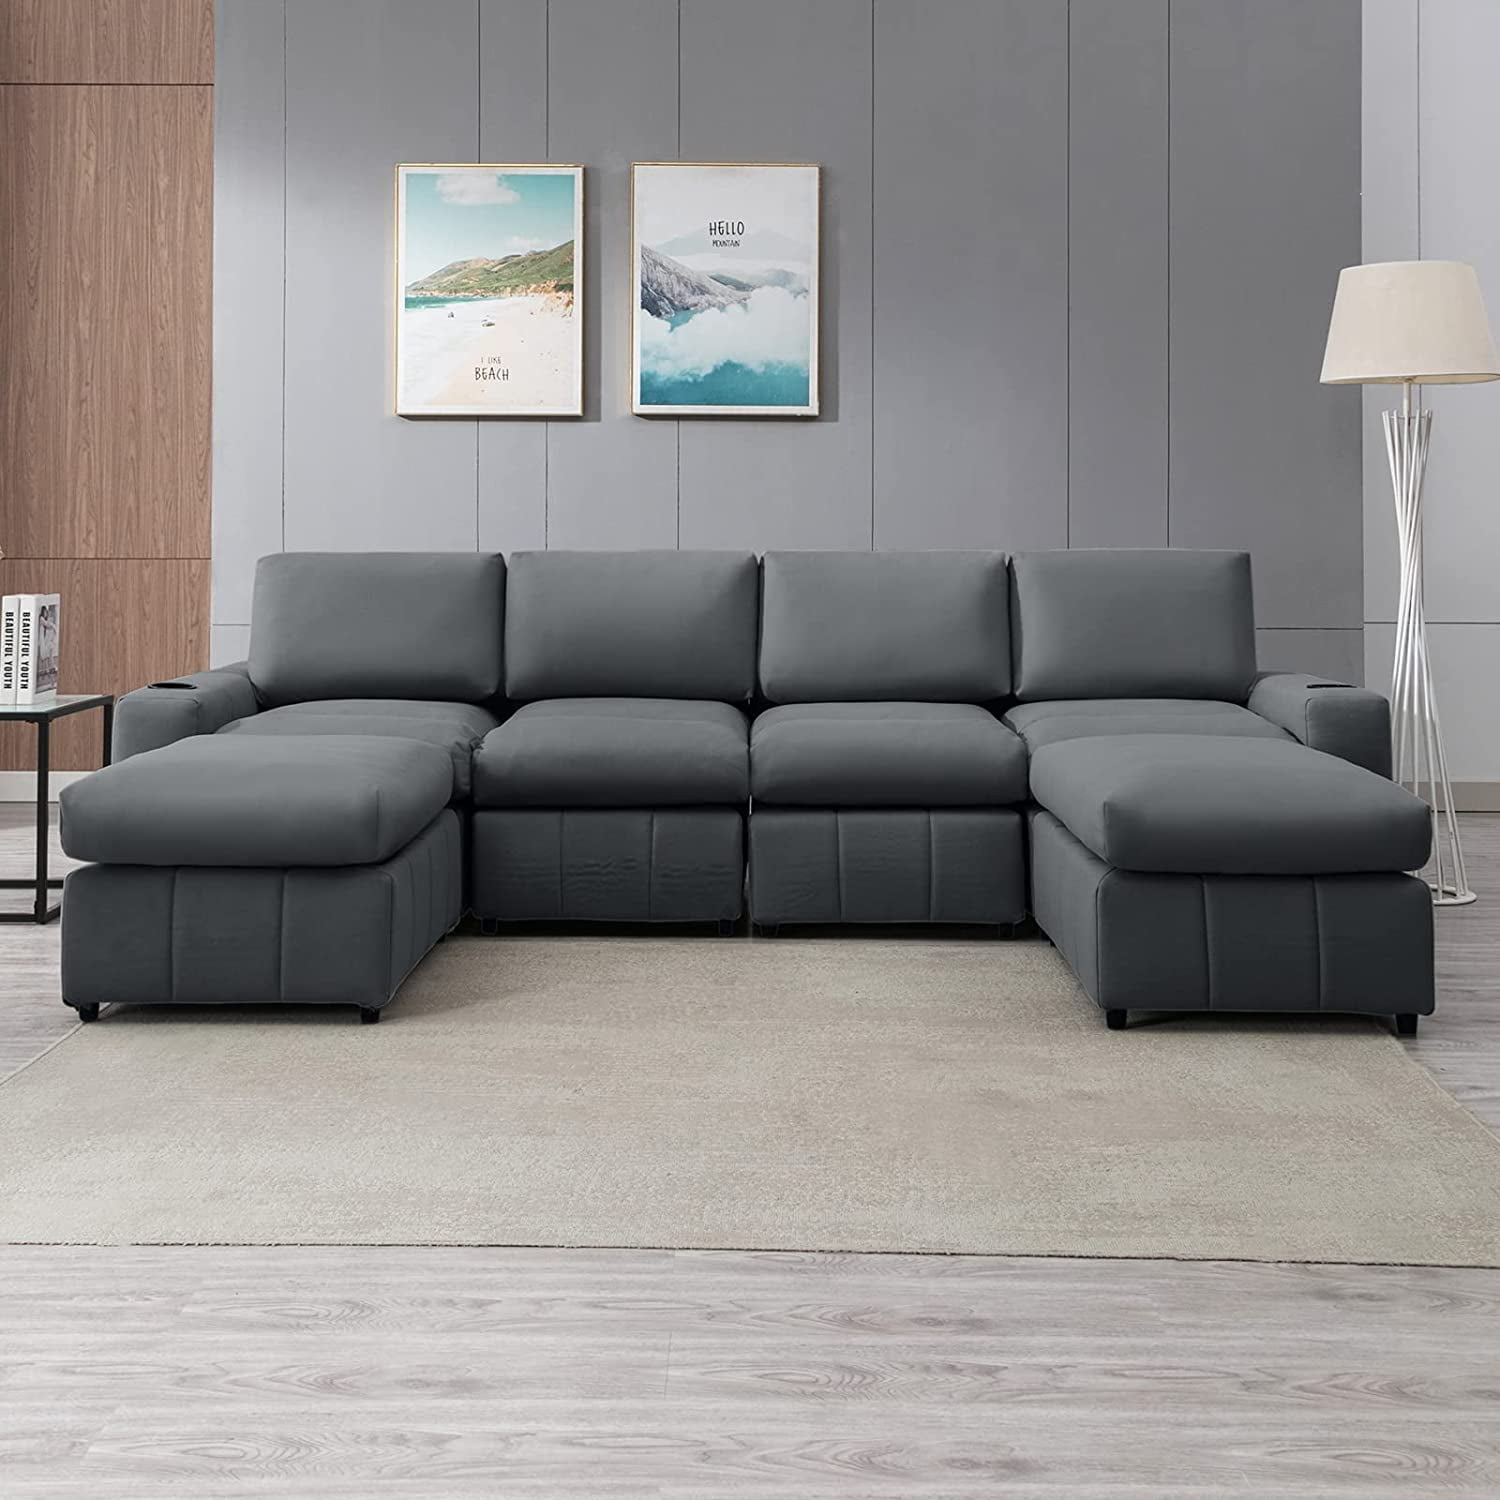 Mjkone Convertible Sectional Sofa Couch with Ottoman, Modular U-Shaped ...